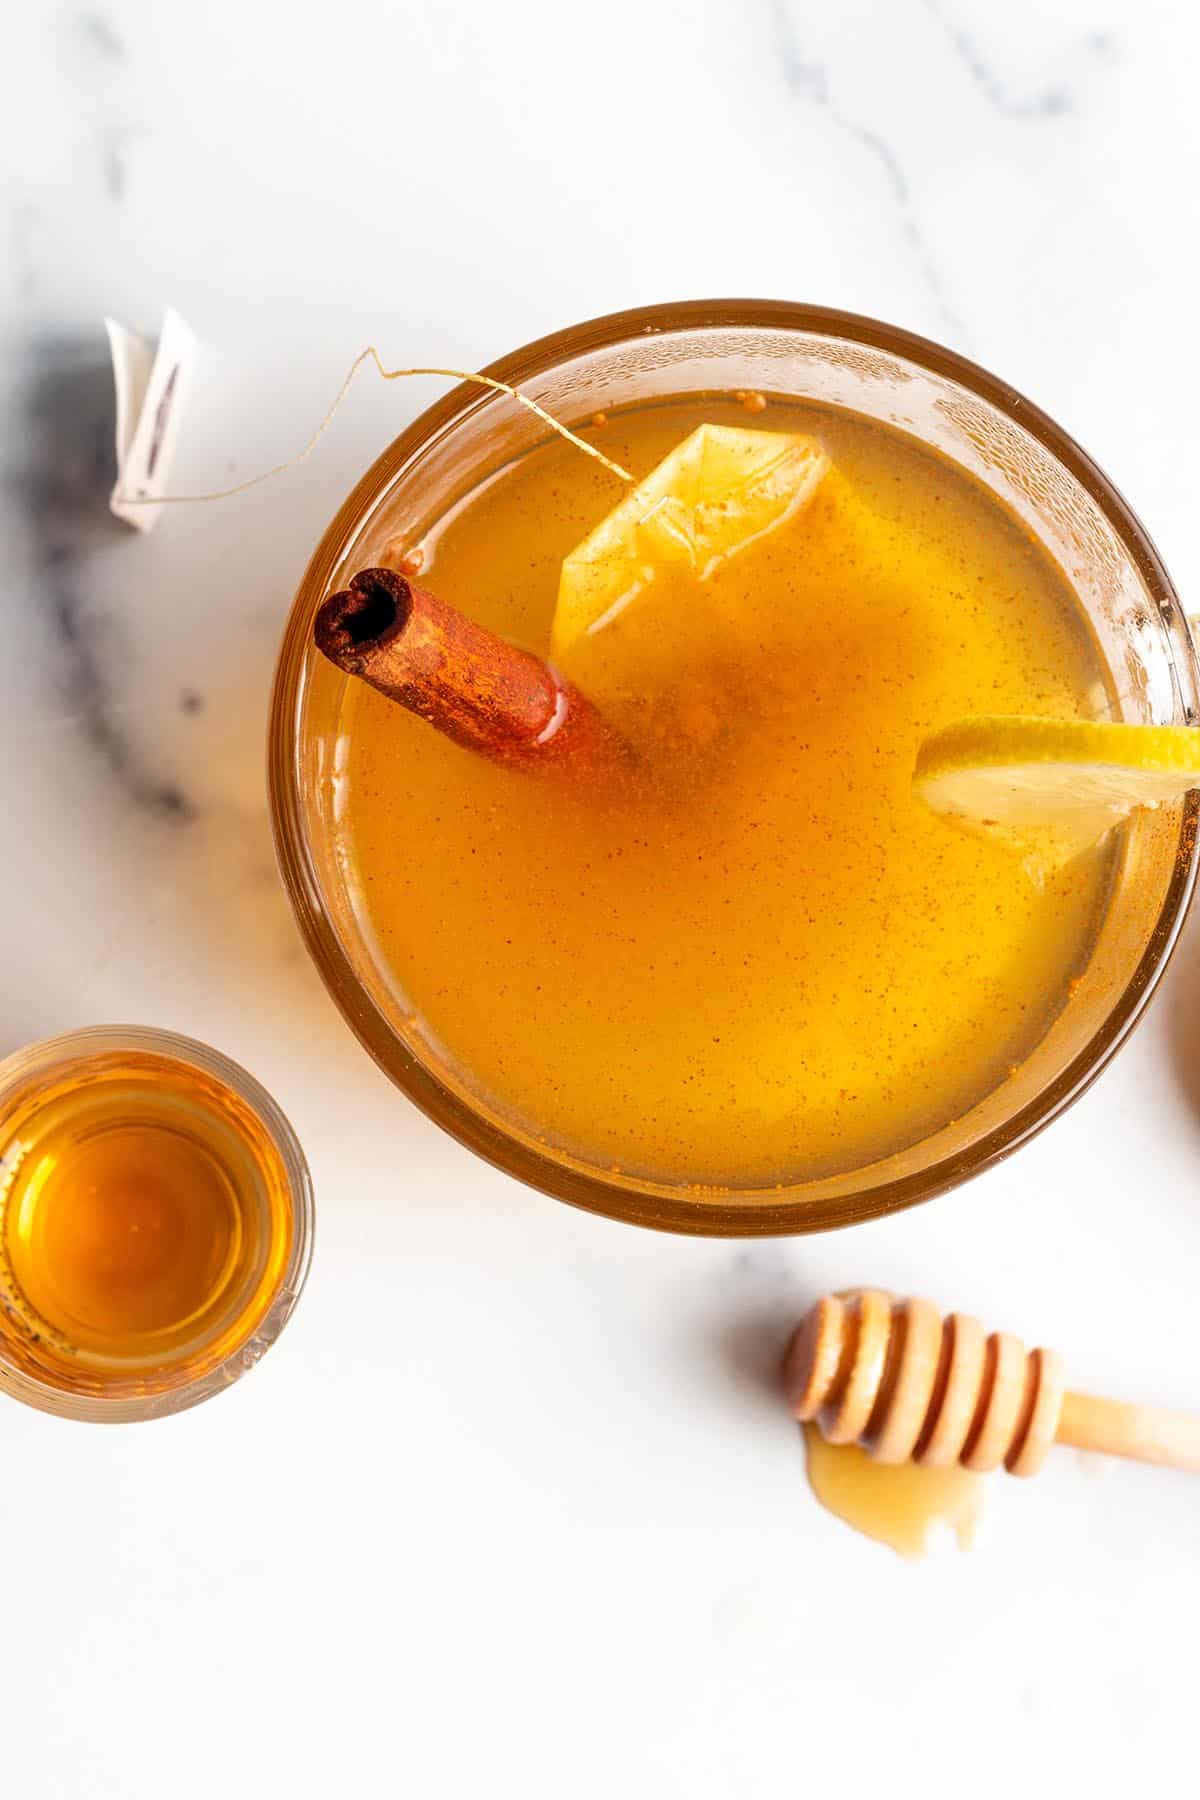 A glass mug with a tea and cinnamon stick, shot of bourbon and honey stick.